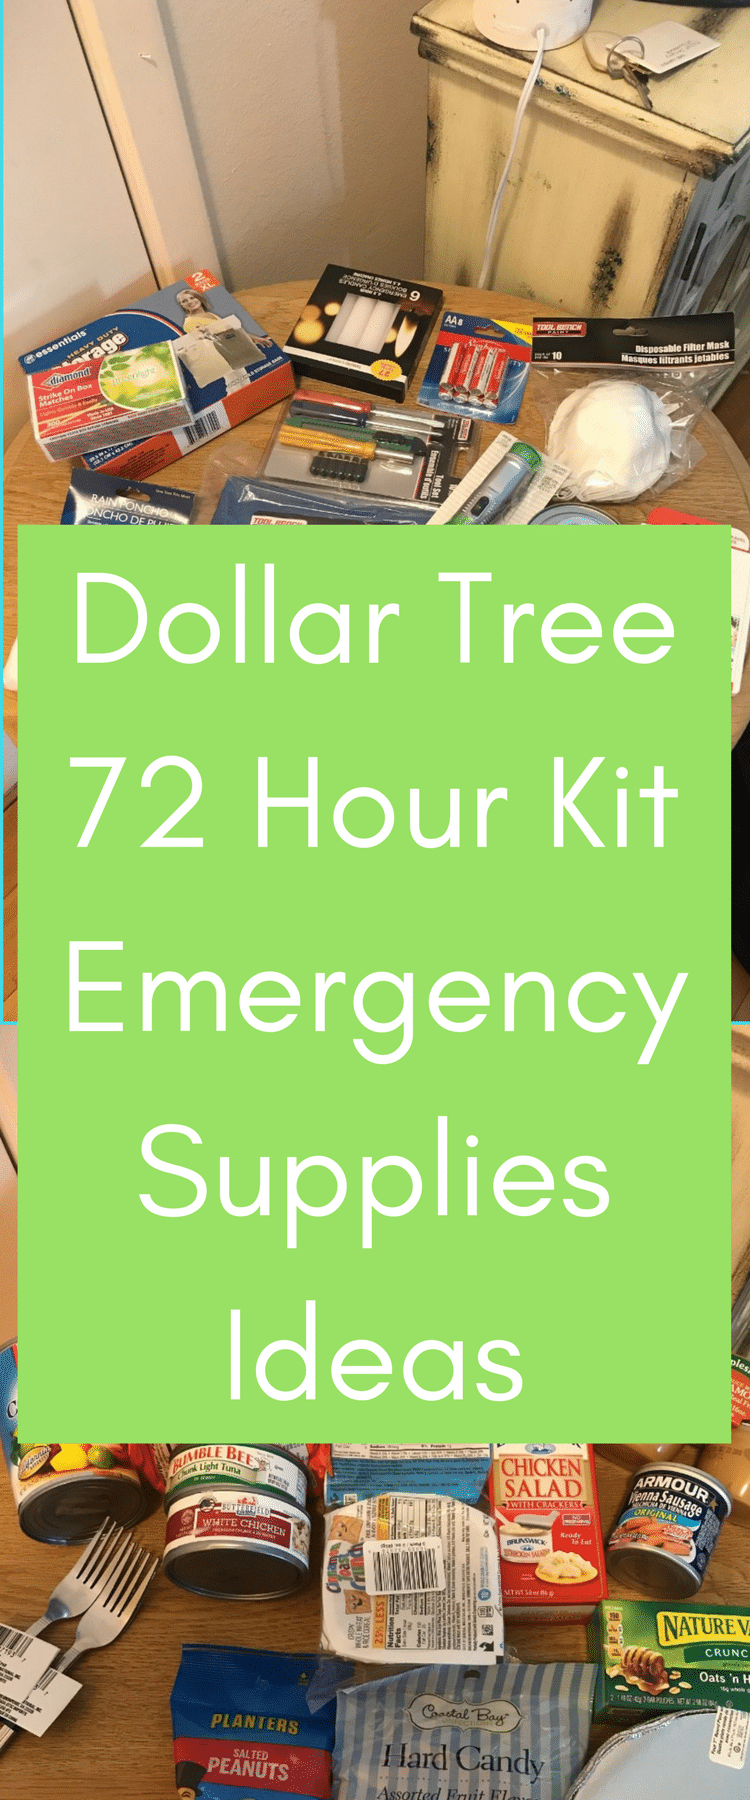 Dollar Tree 72 Hour Kit / Dollar Tree Ideas / Dollar Tree Emergency Supplies / Emergency Prep / 72 Hour kit